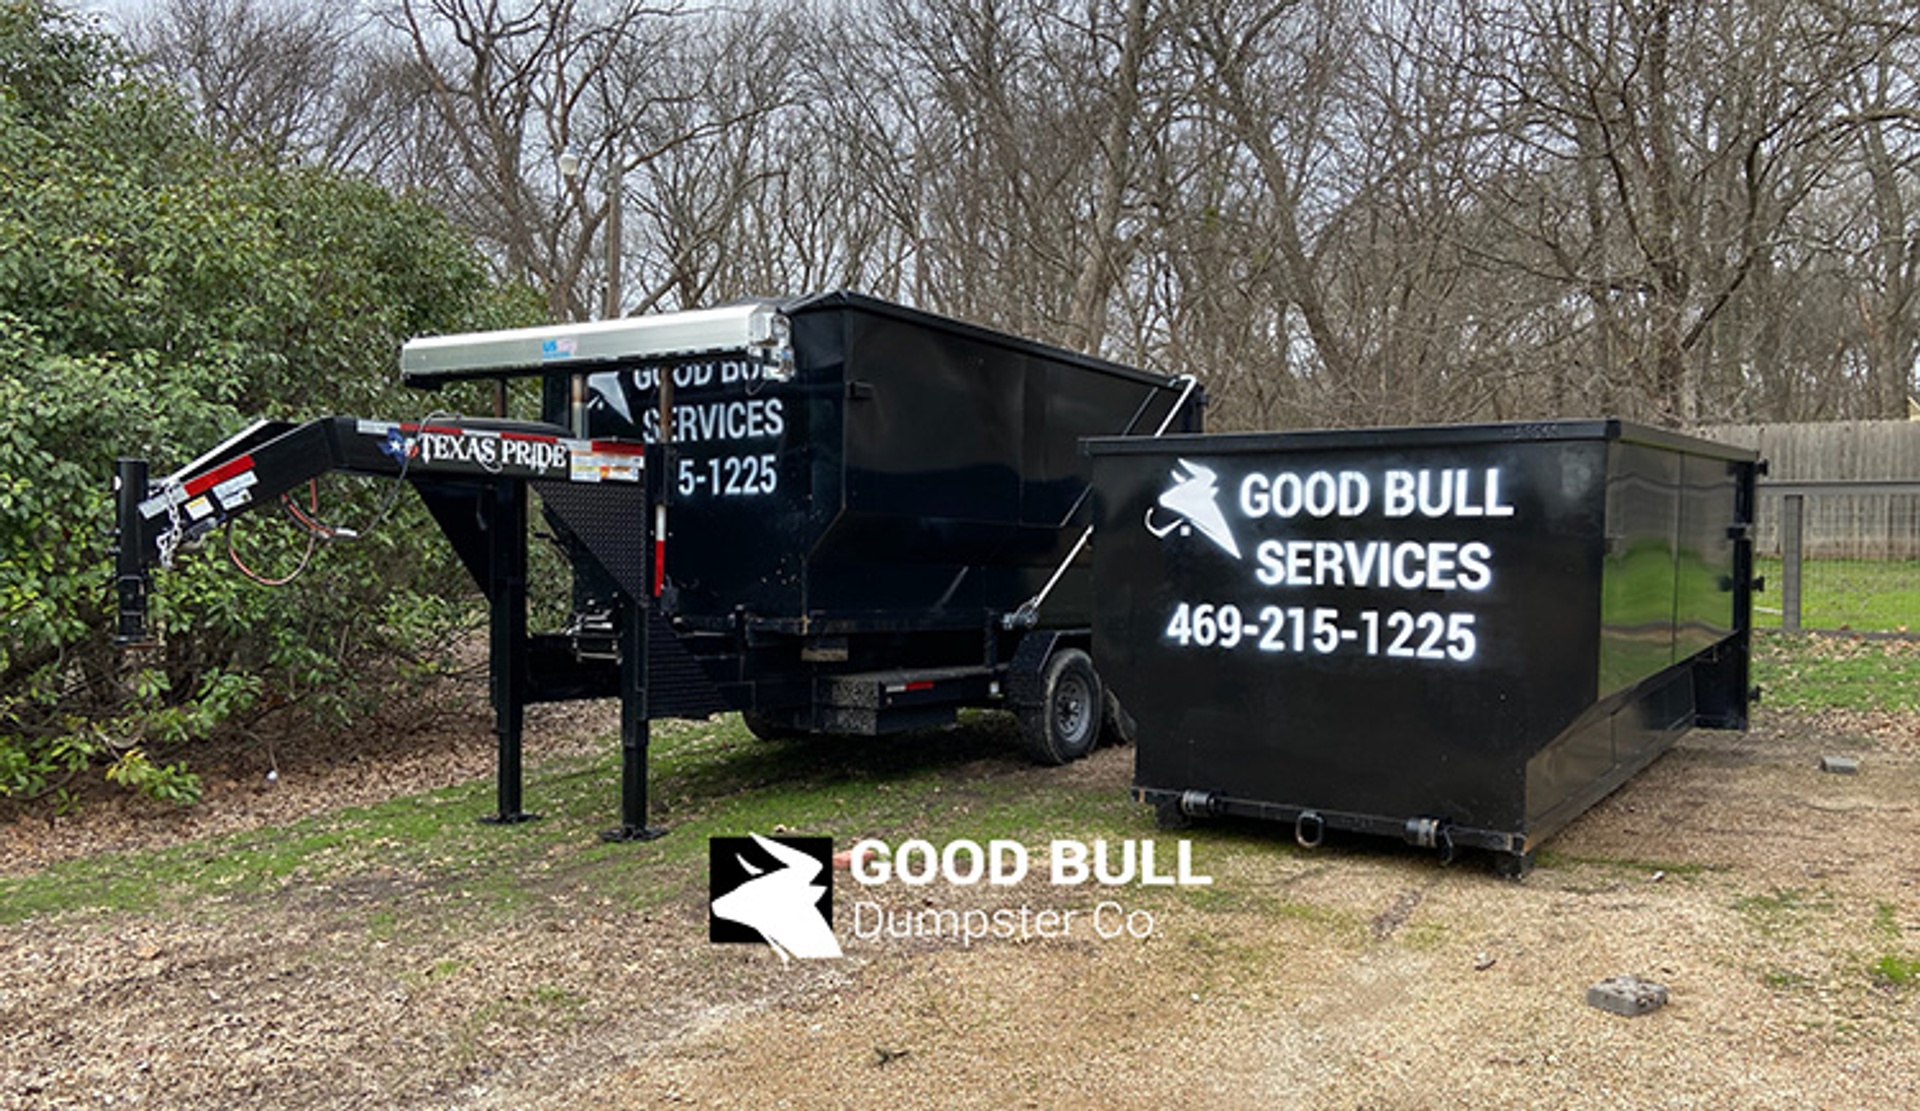 Good Bull Dumpster Company 1271 Camino Real, Fairview Texas 75069